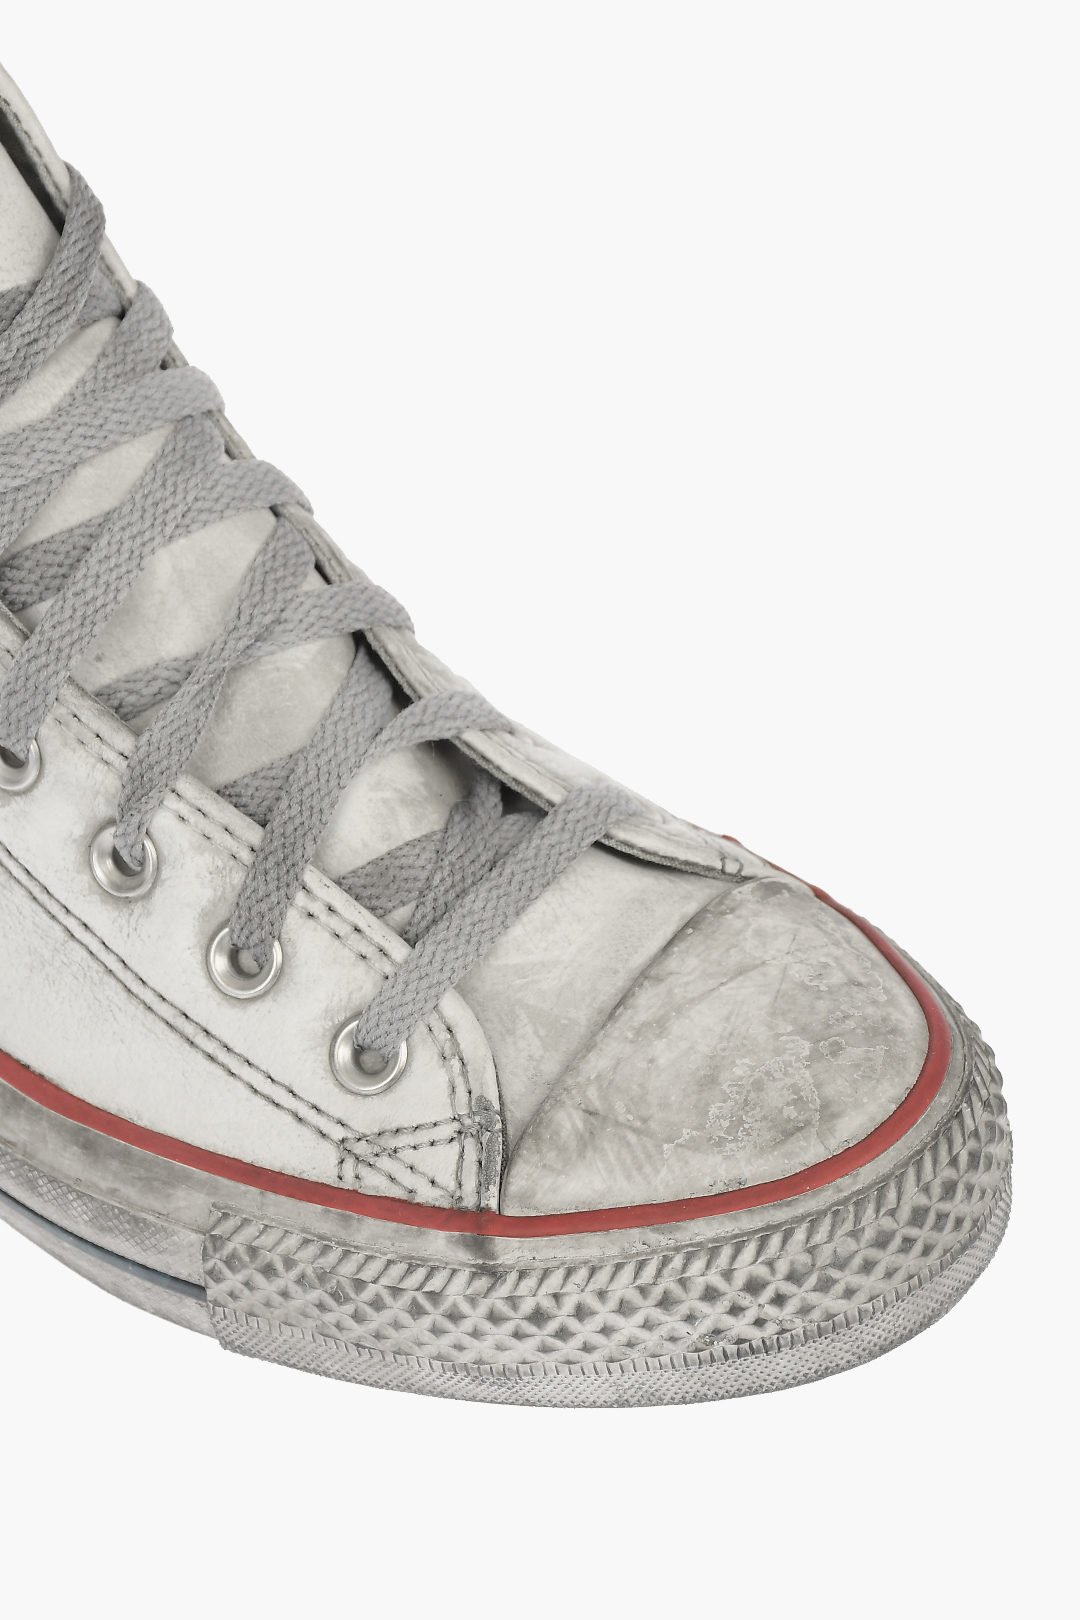 ALL STAR Sneakers in Pelle effetto Vintage فوائد عرق السوس